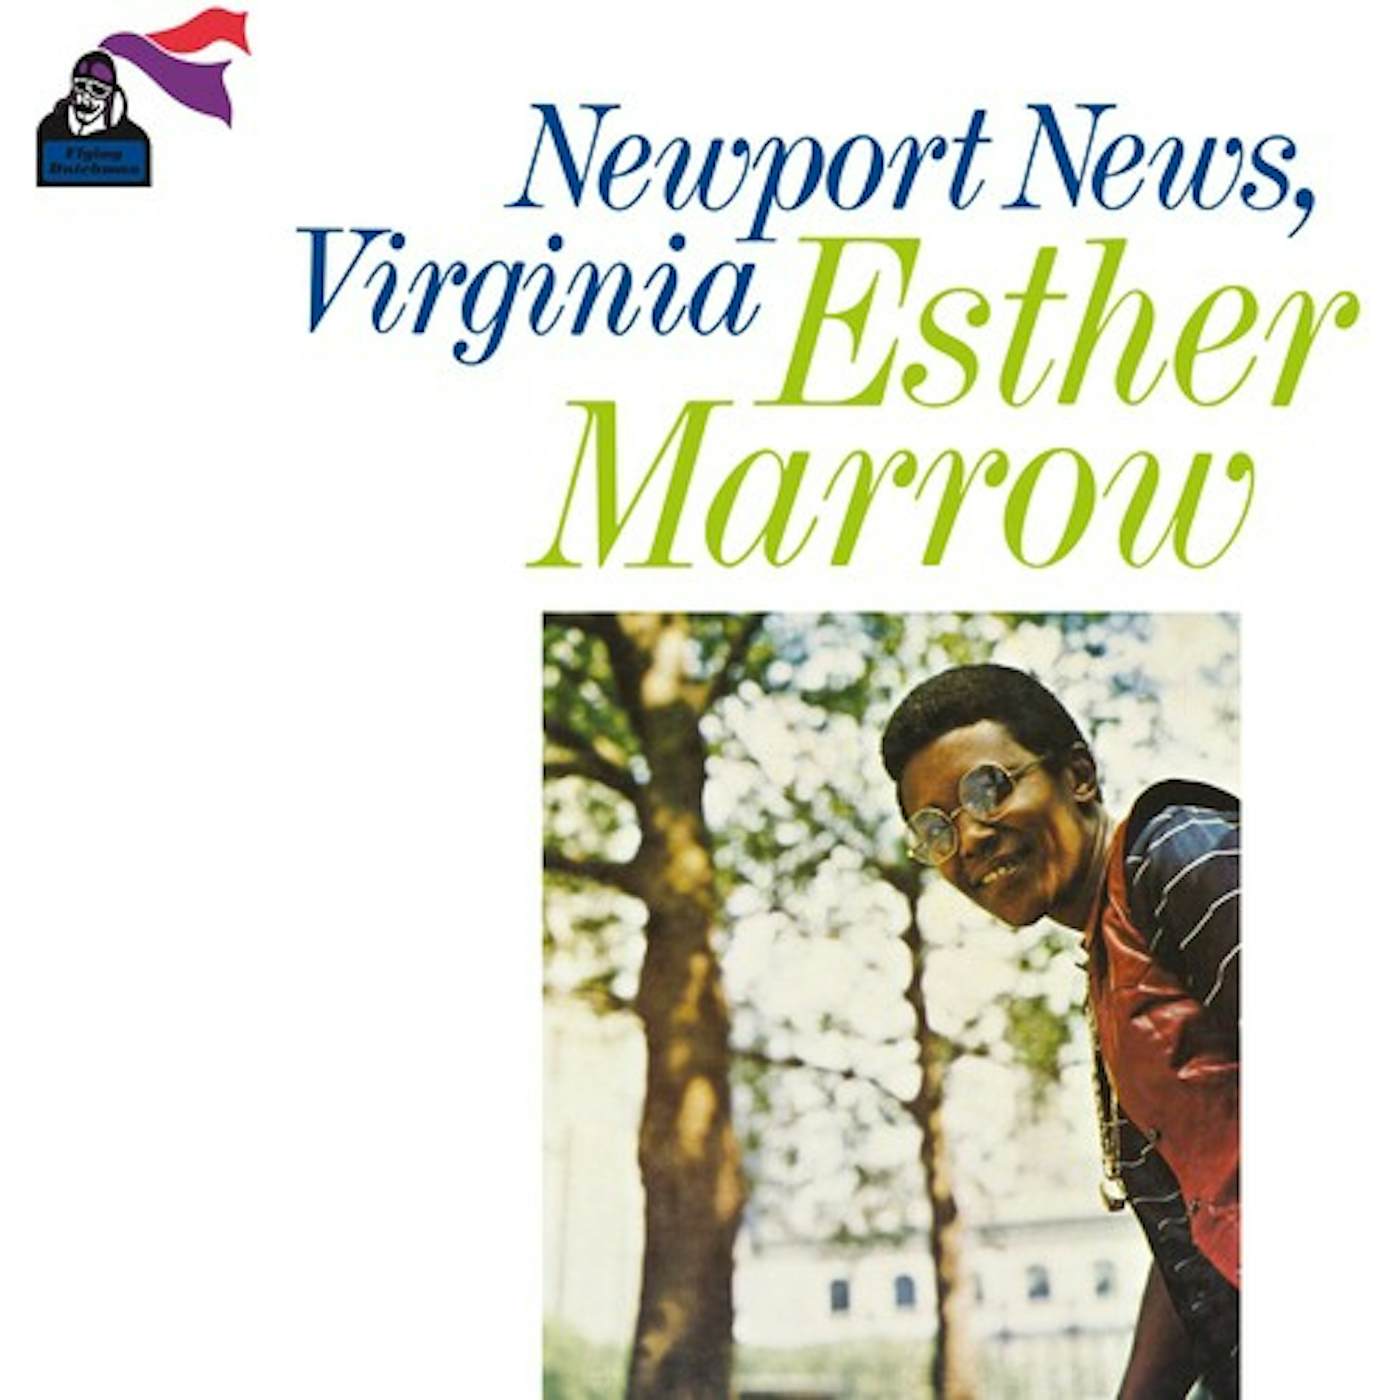 Esther Marrow Newport News Virginia Vinyl Record